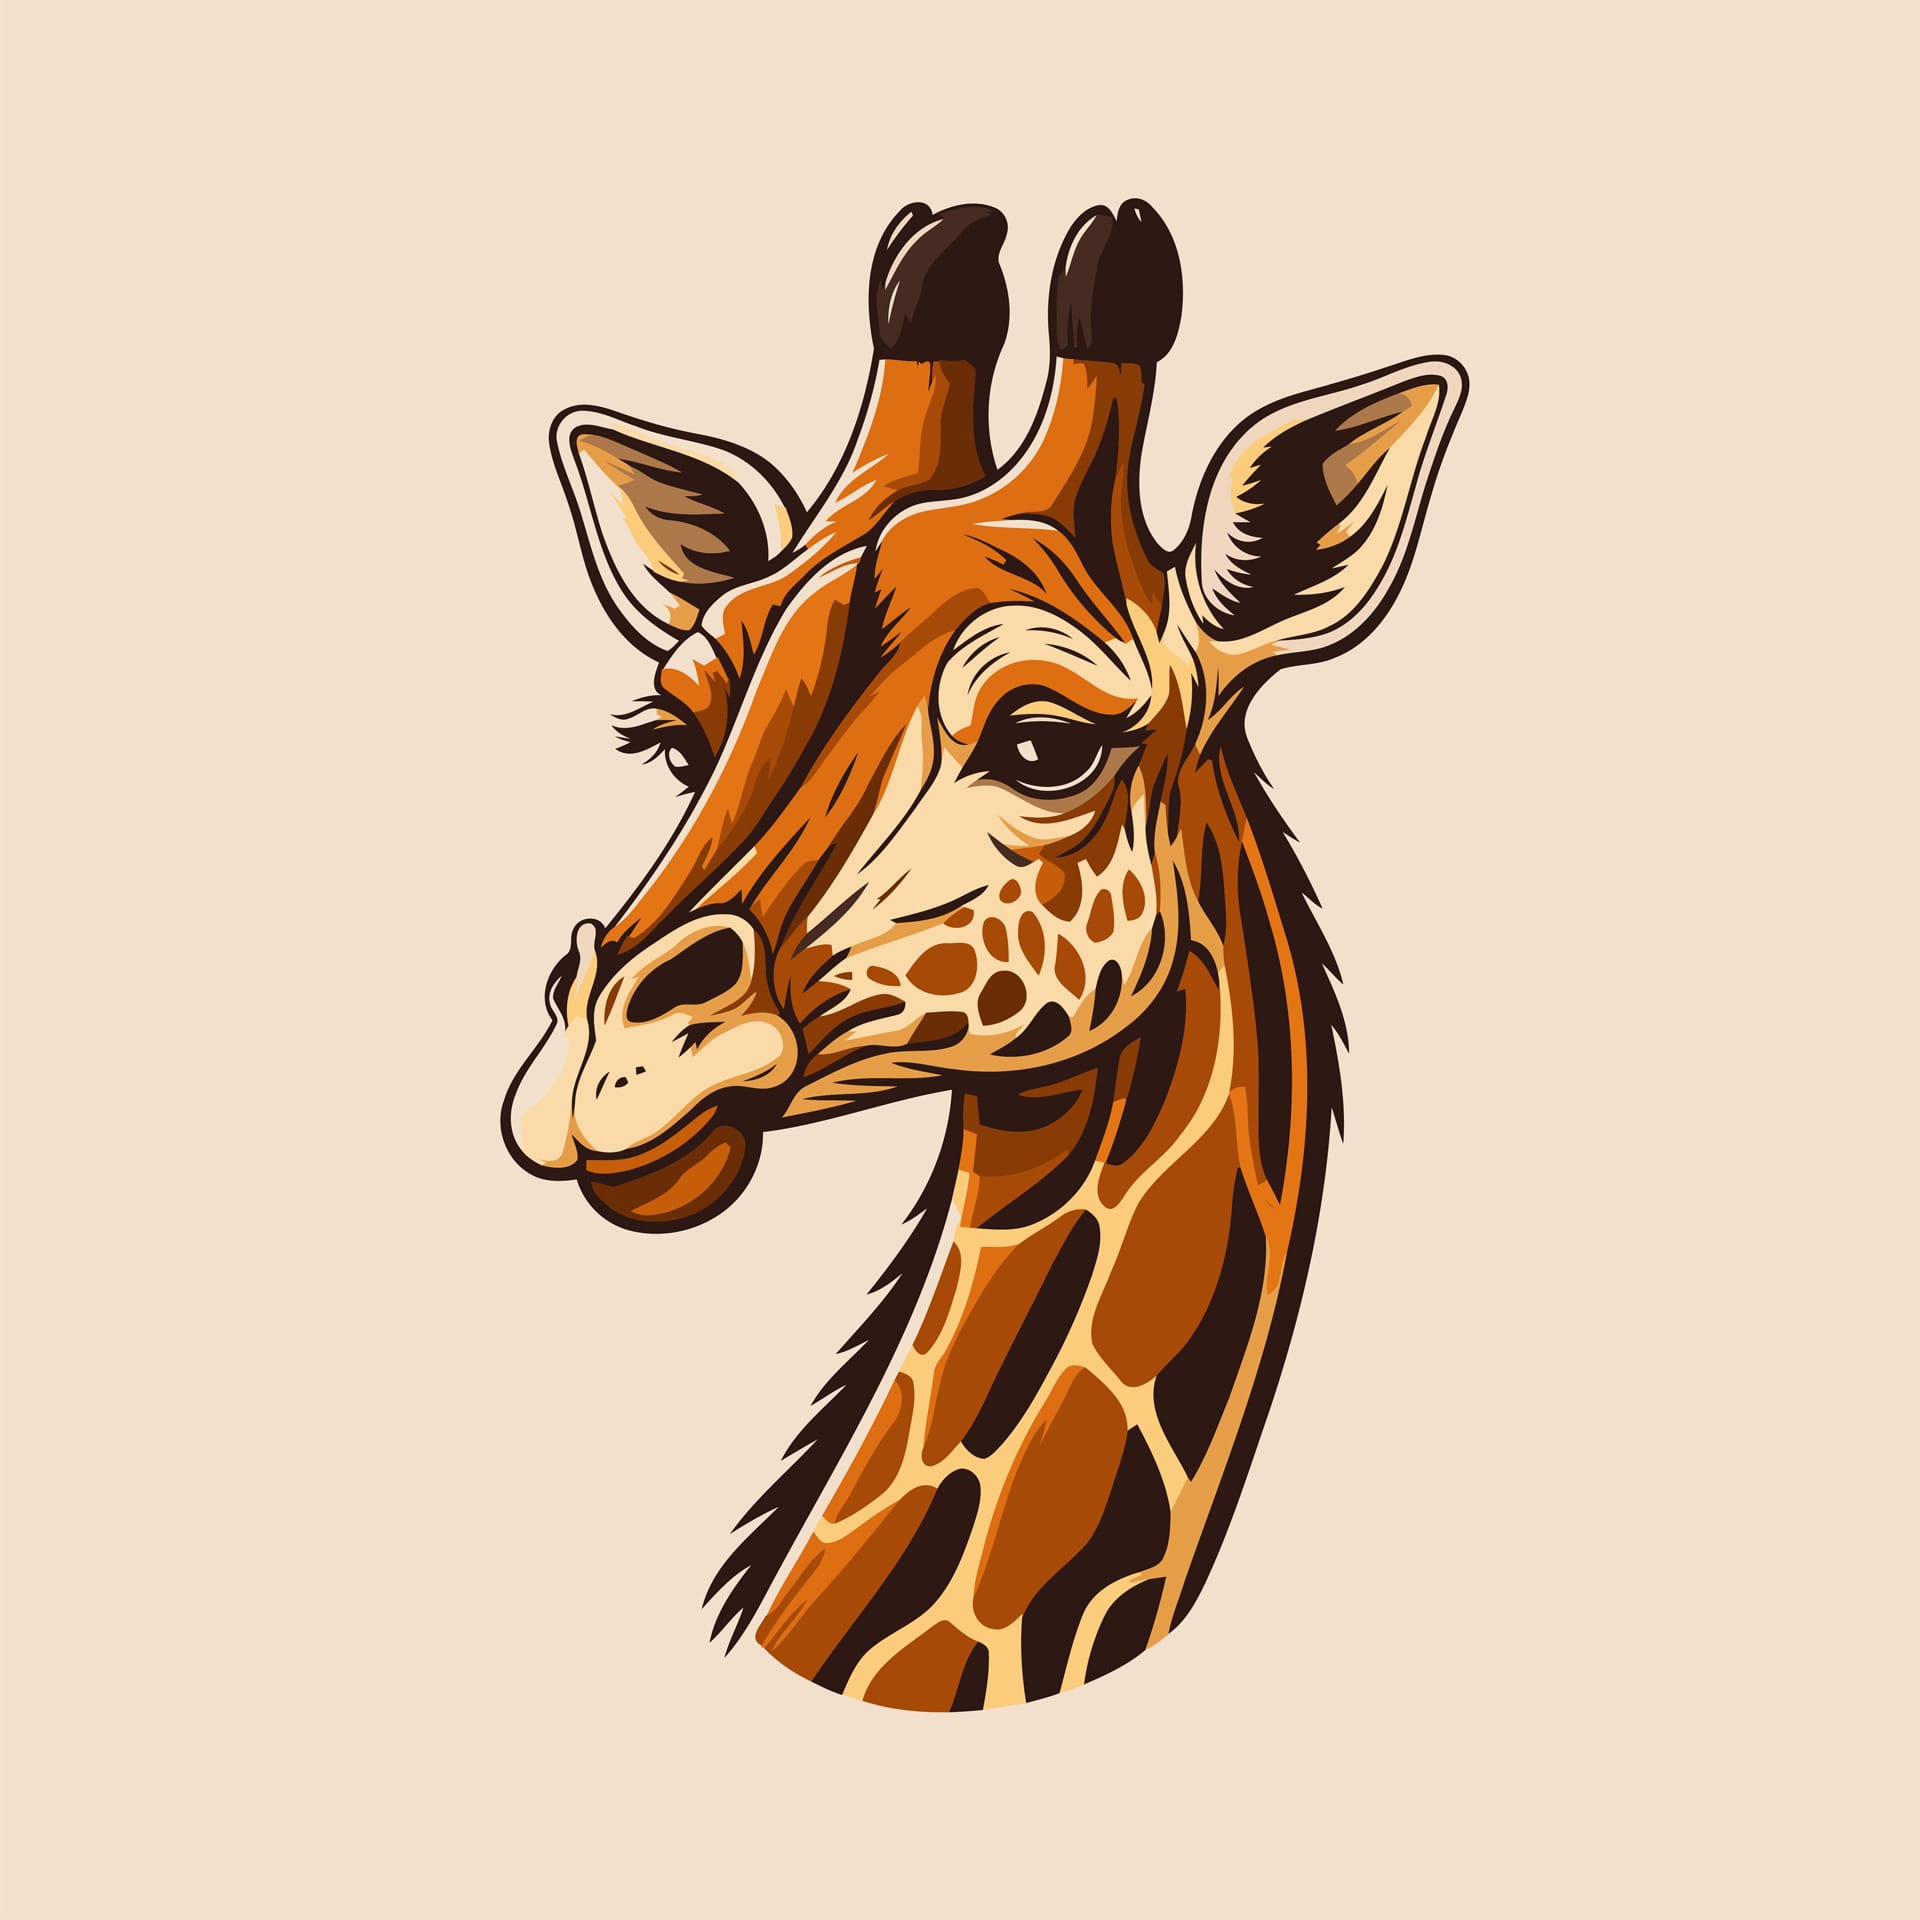 Giraffe logo animal character logo mascot cartoon design template